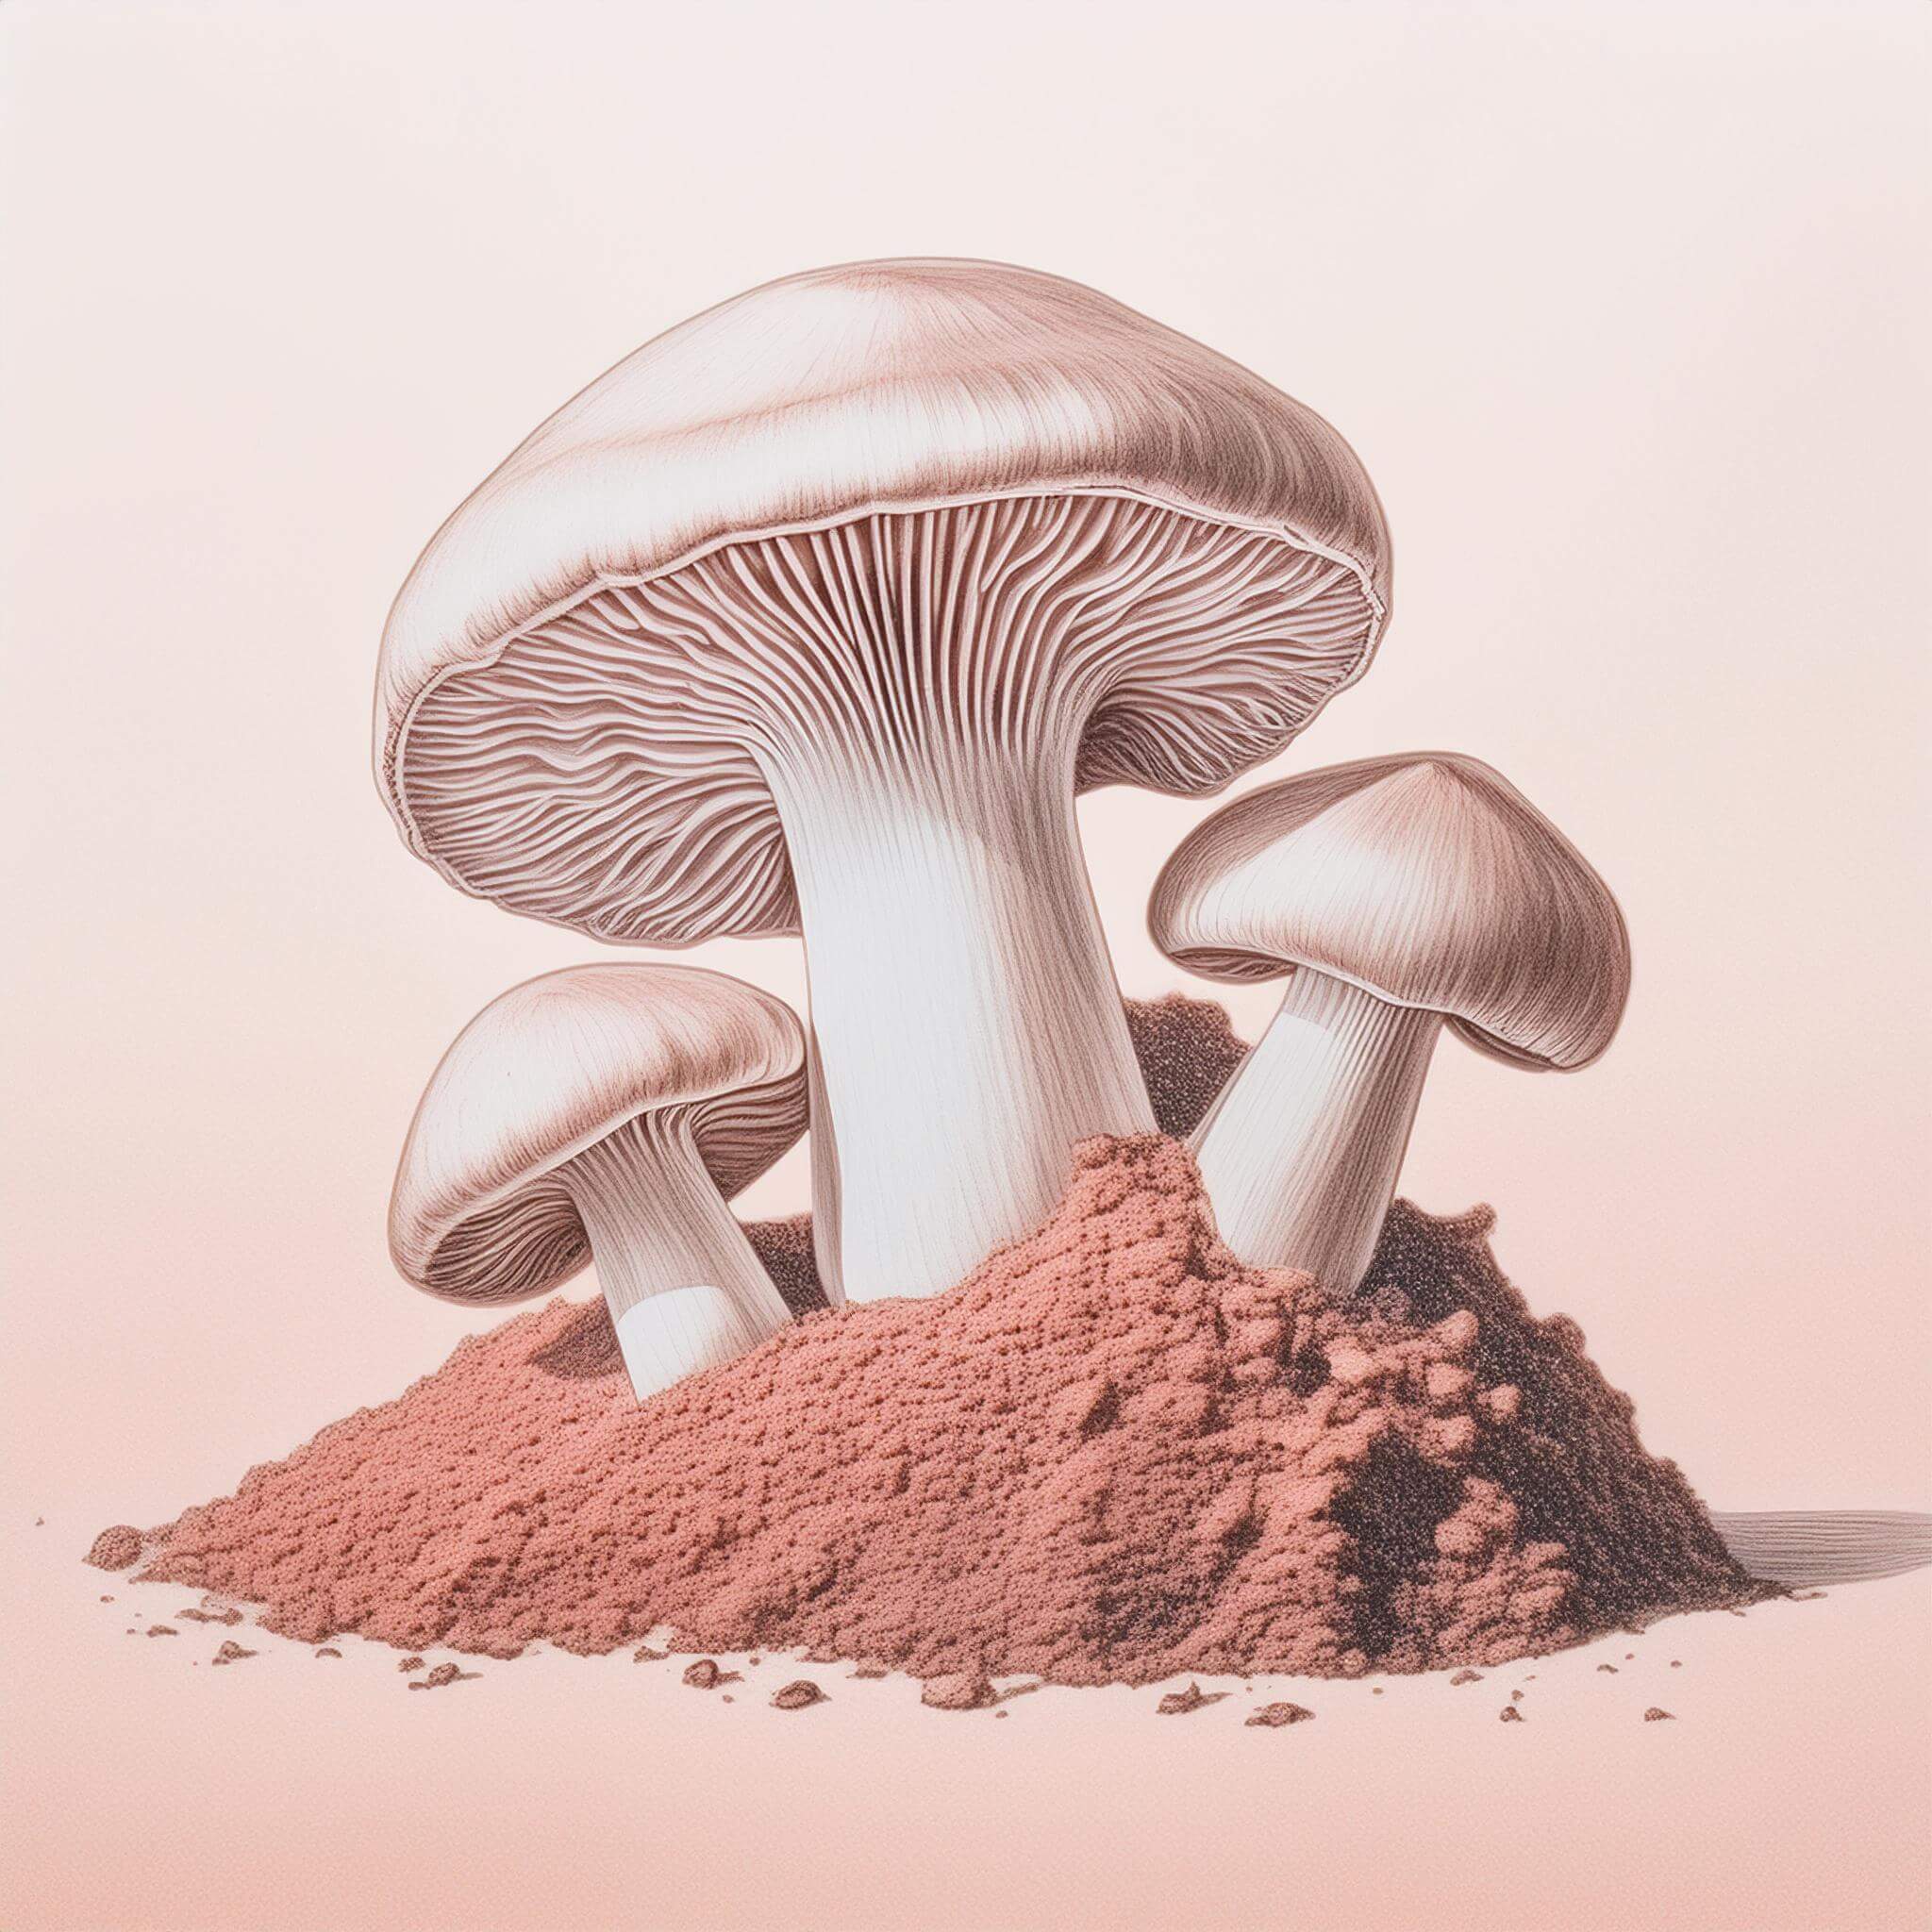 drawing of mushrooms and mushroom powder 